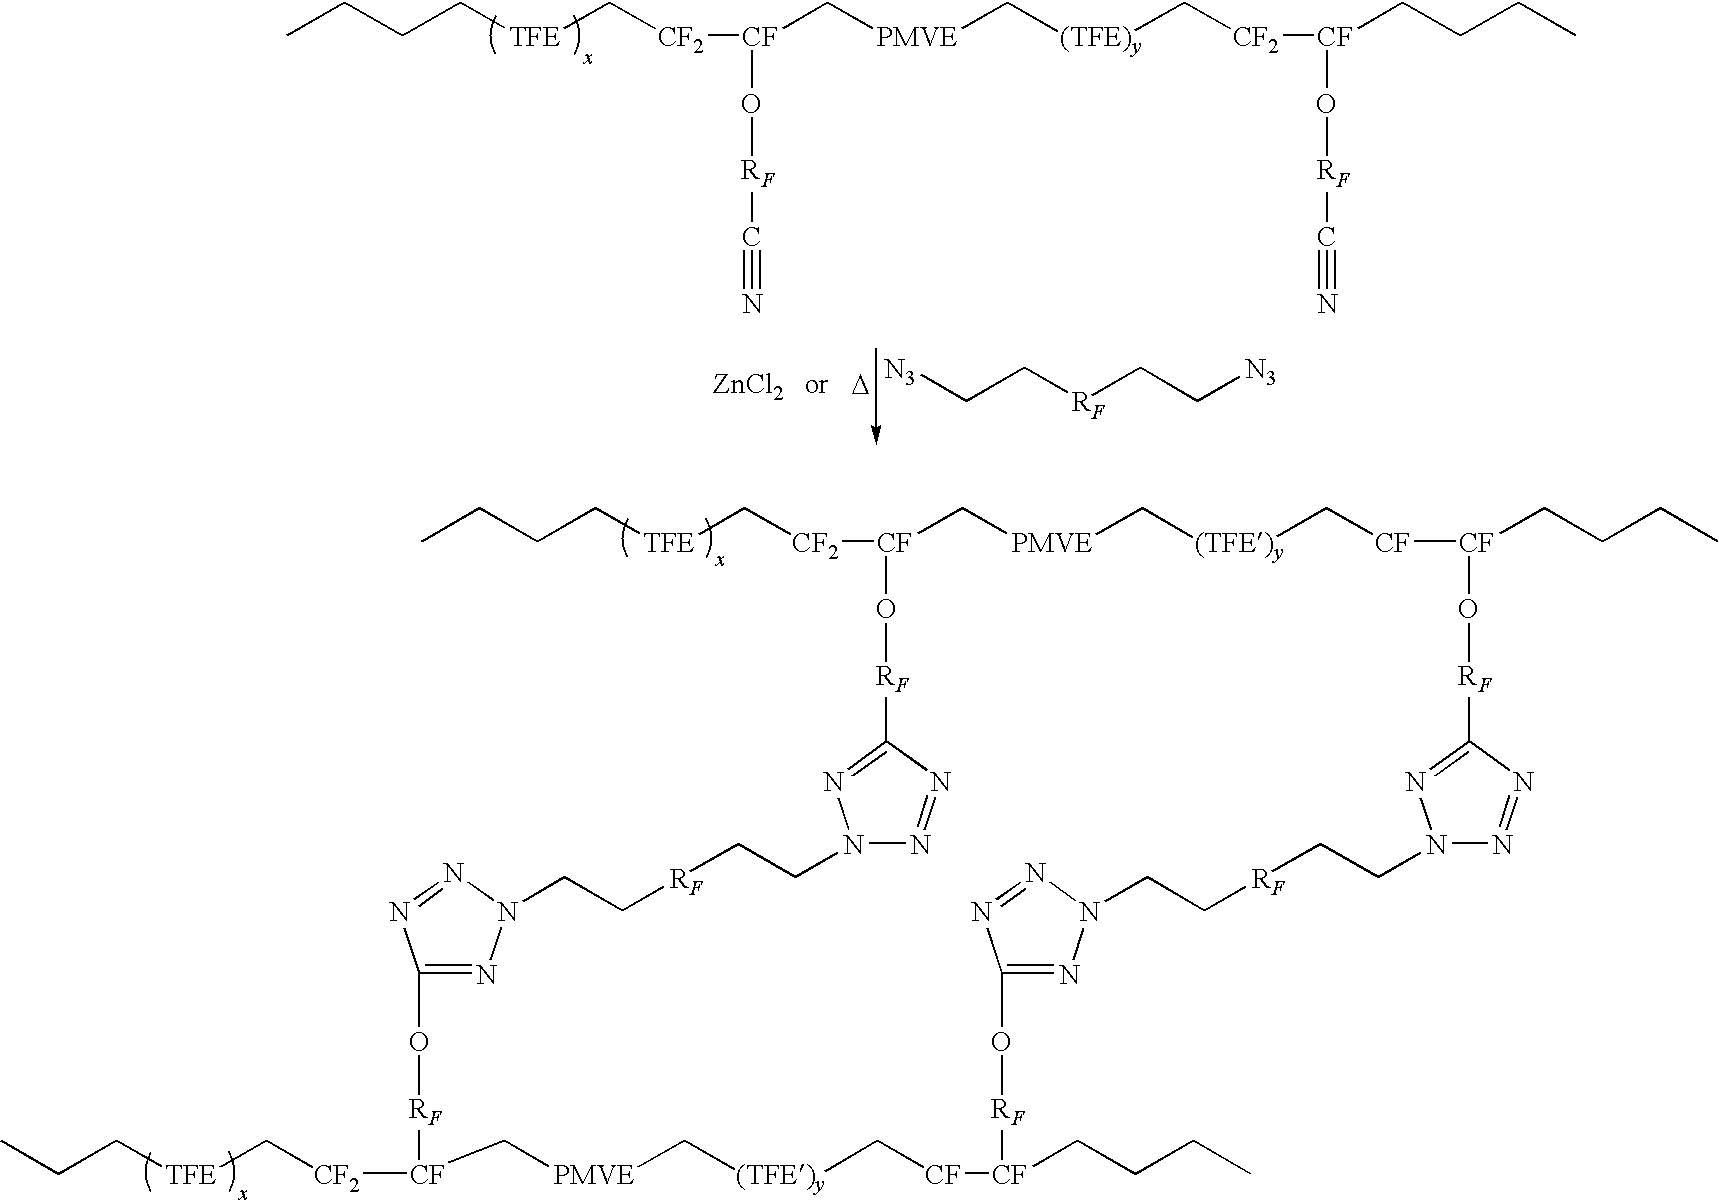 Curable fluoroelastomer compositions